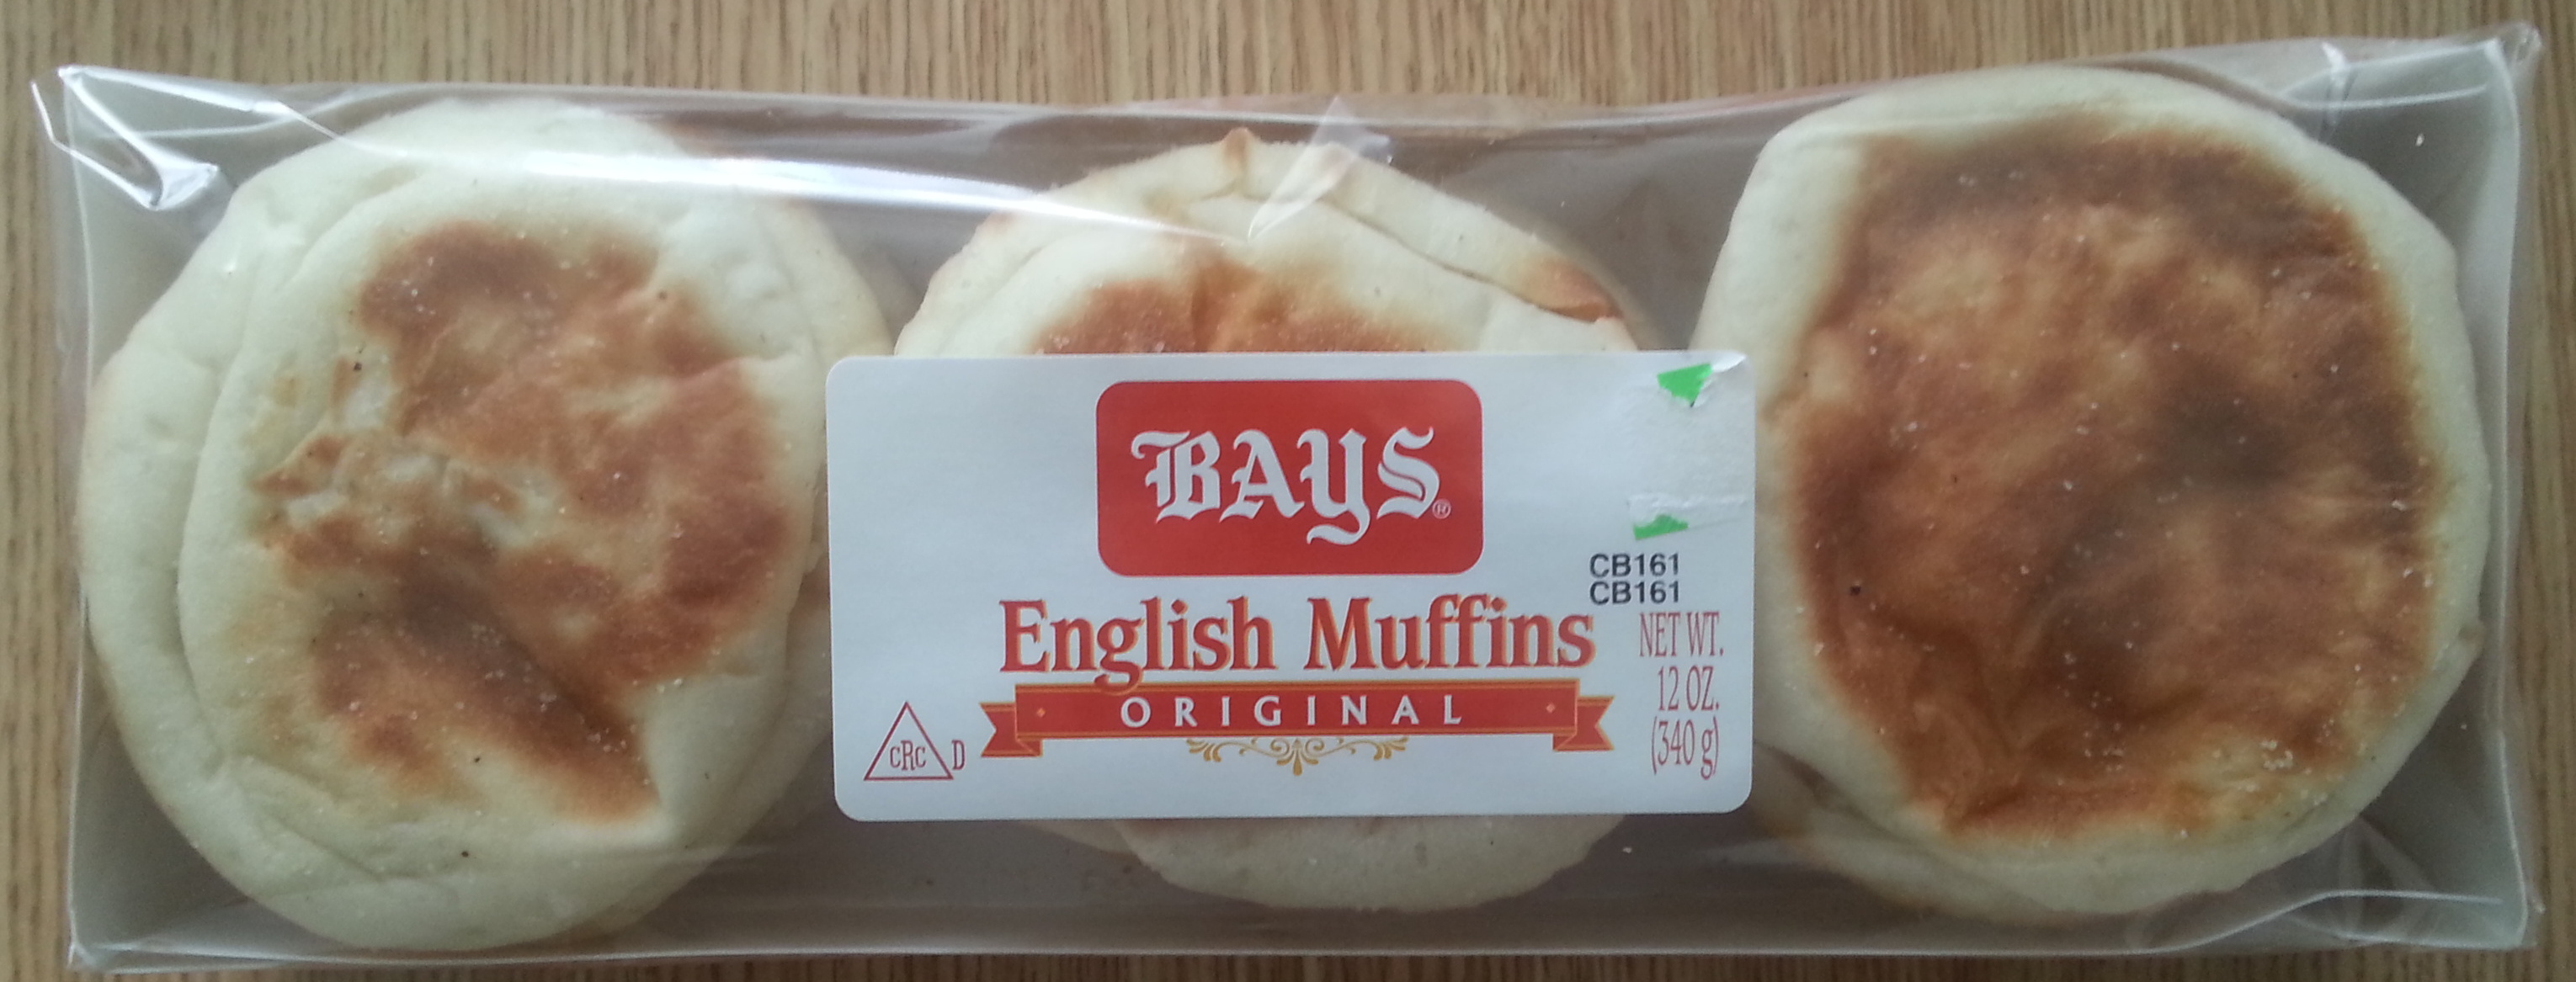 Original english muffins - Producto - en